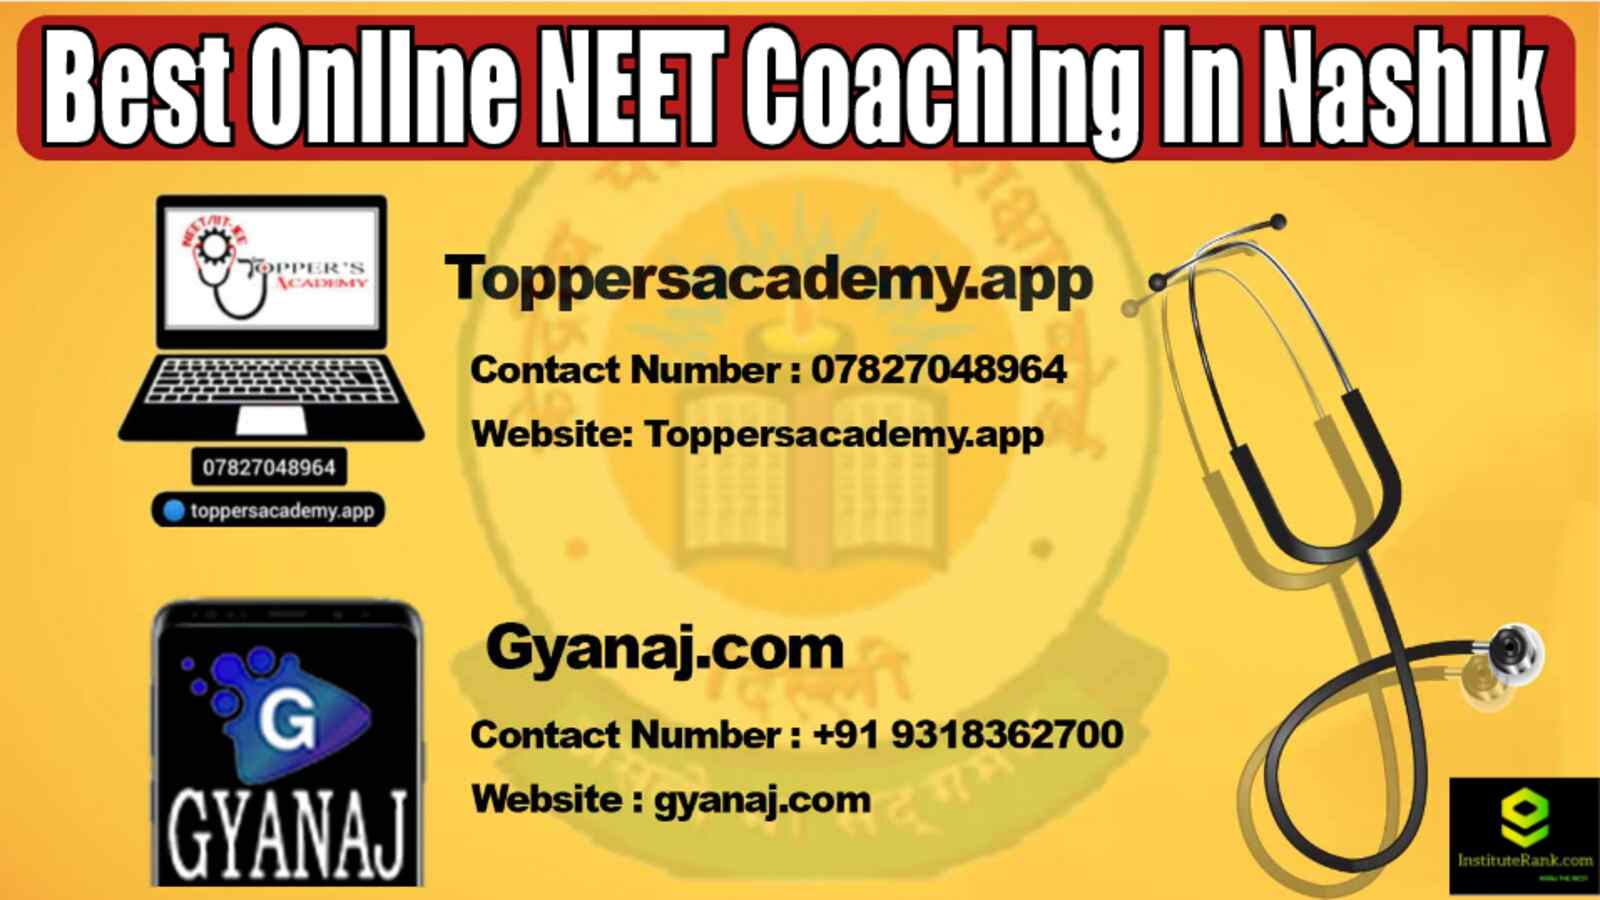 Best Online NEET Coaching in Nashik 2022